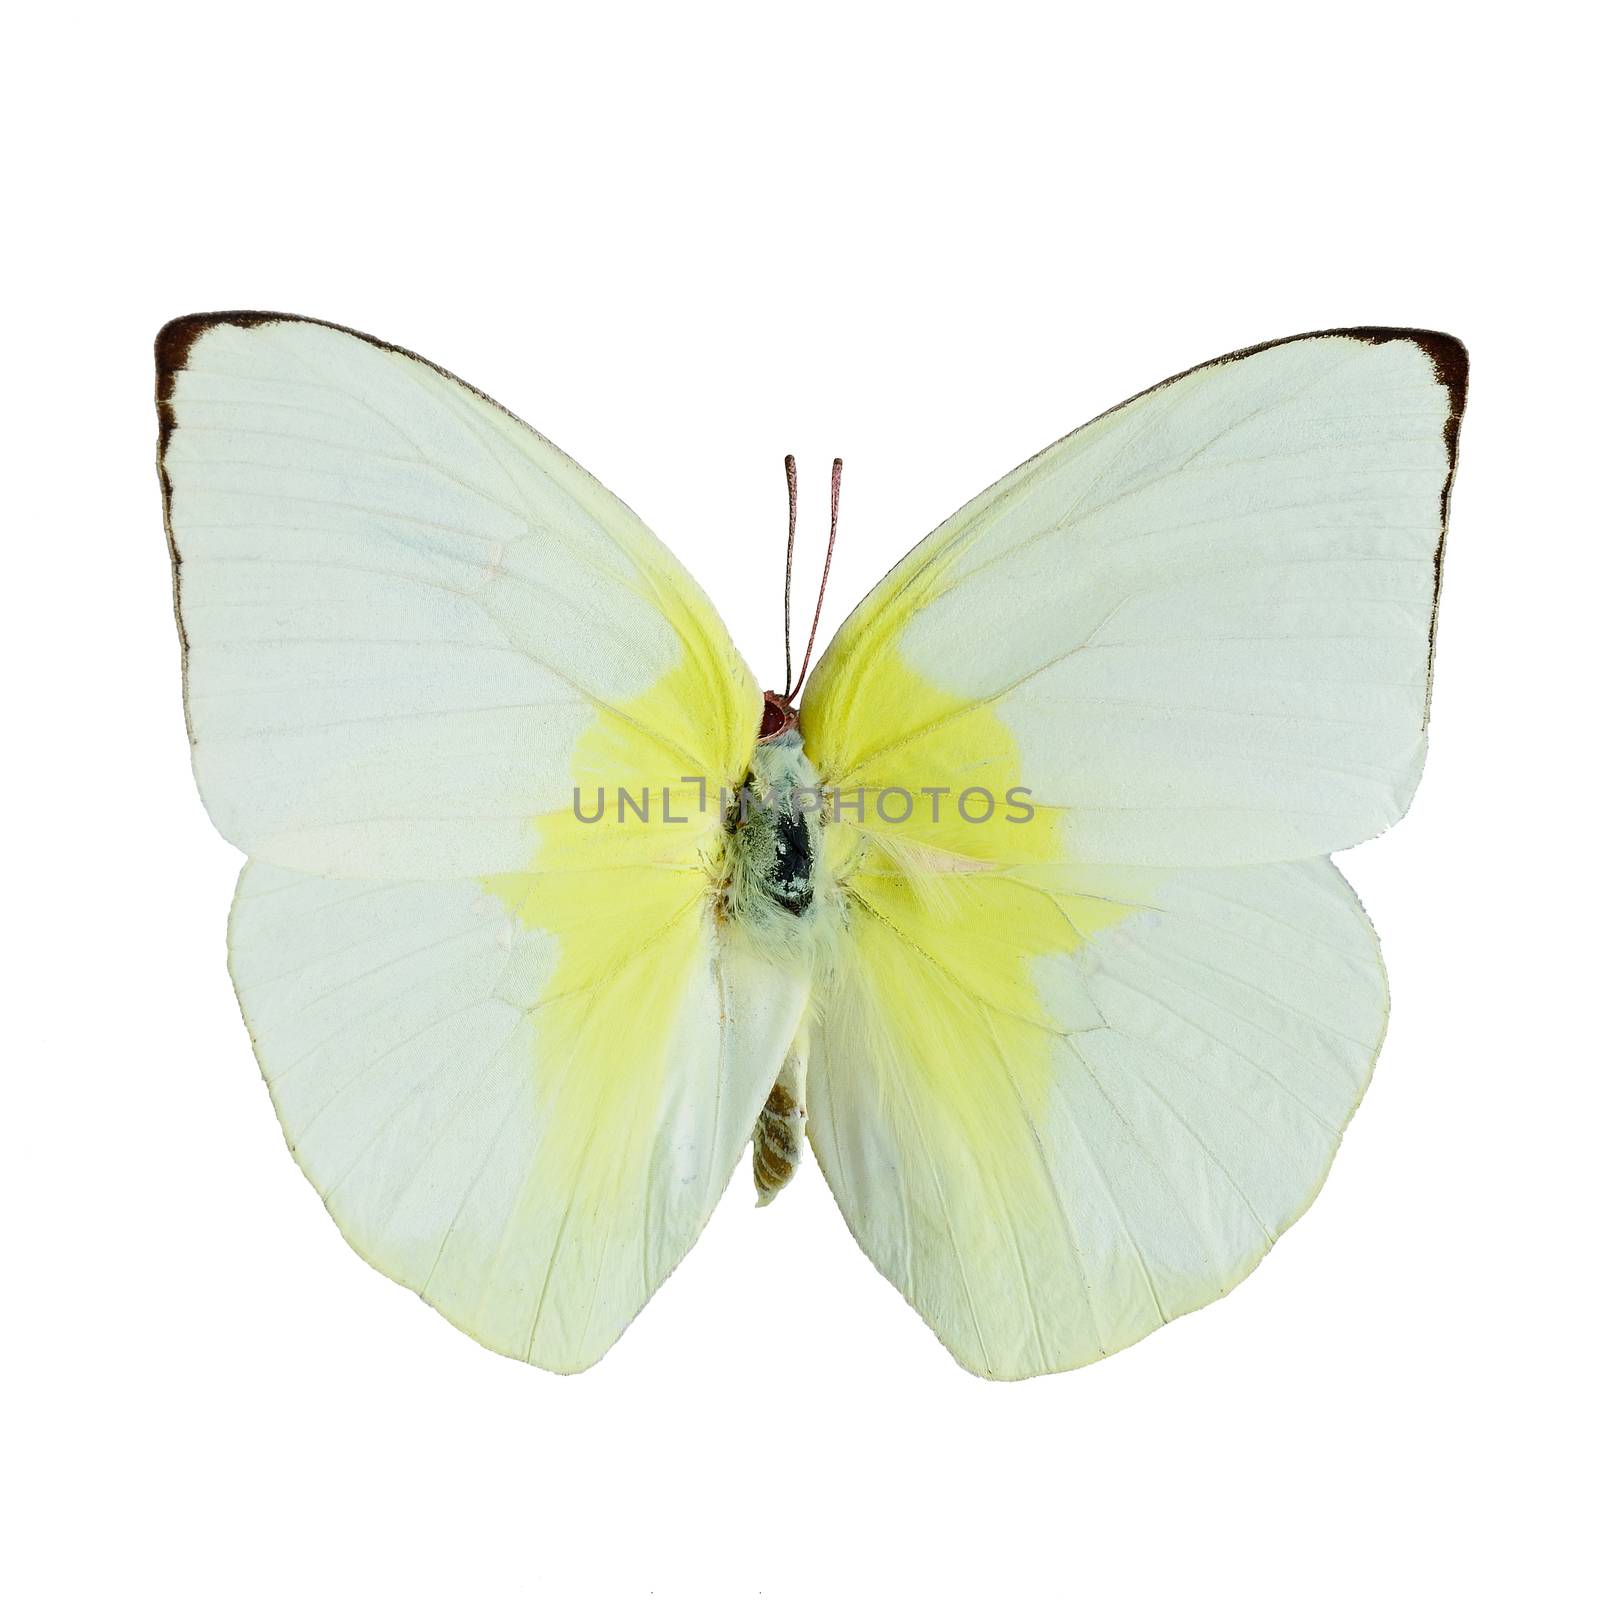 Lemon Emigrant butterfly by panuruangjan